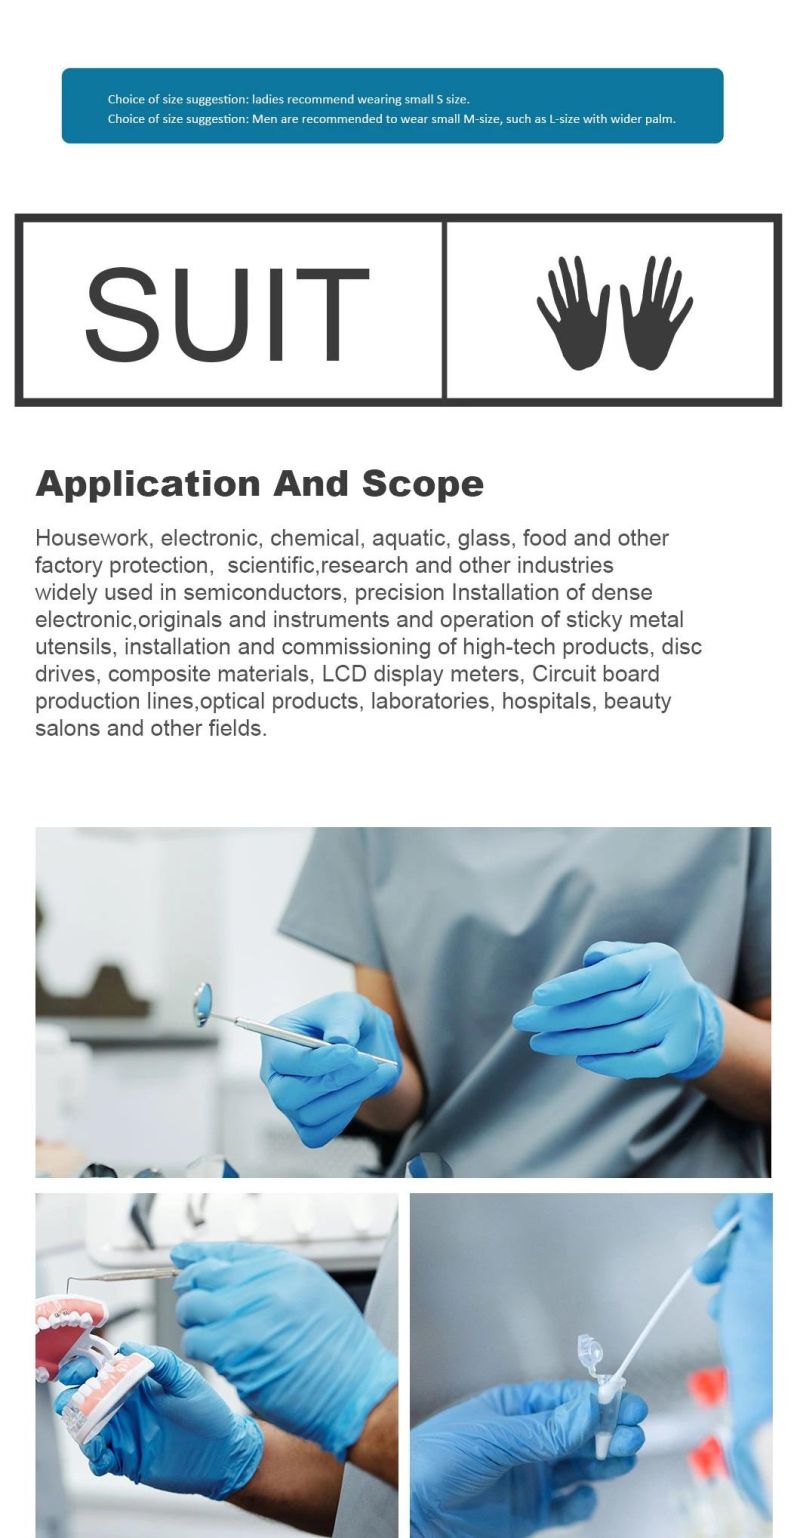 Disposable Medical Examination Black Nitrile Non-Sterile Large Gloves